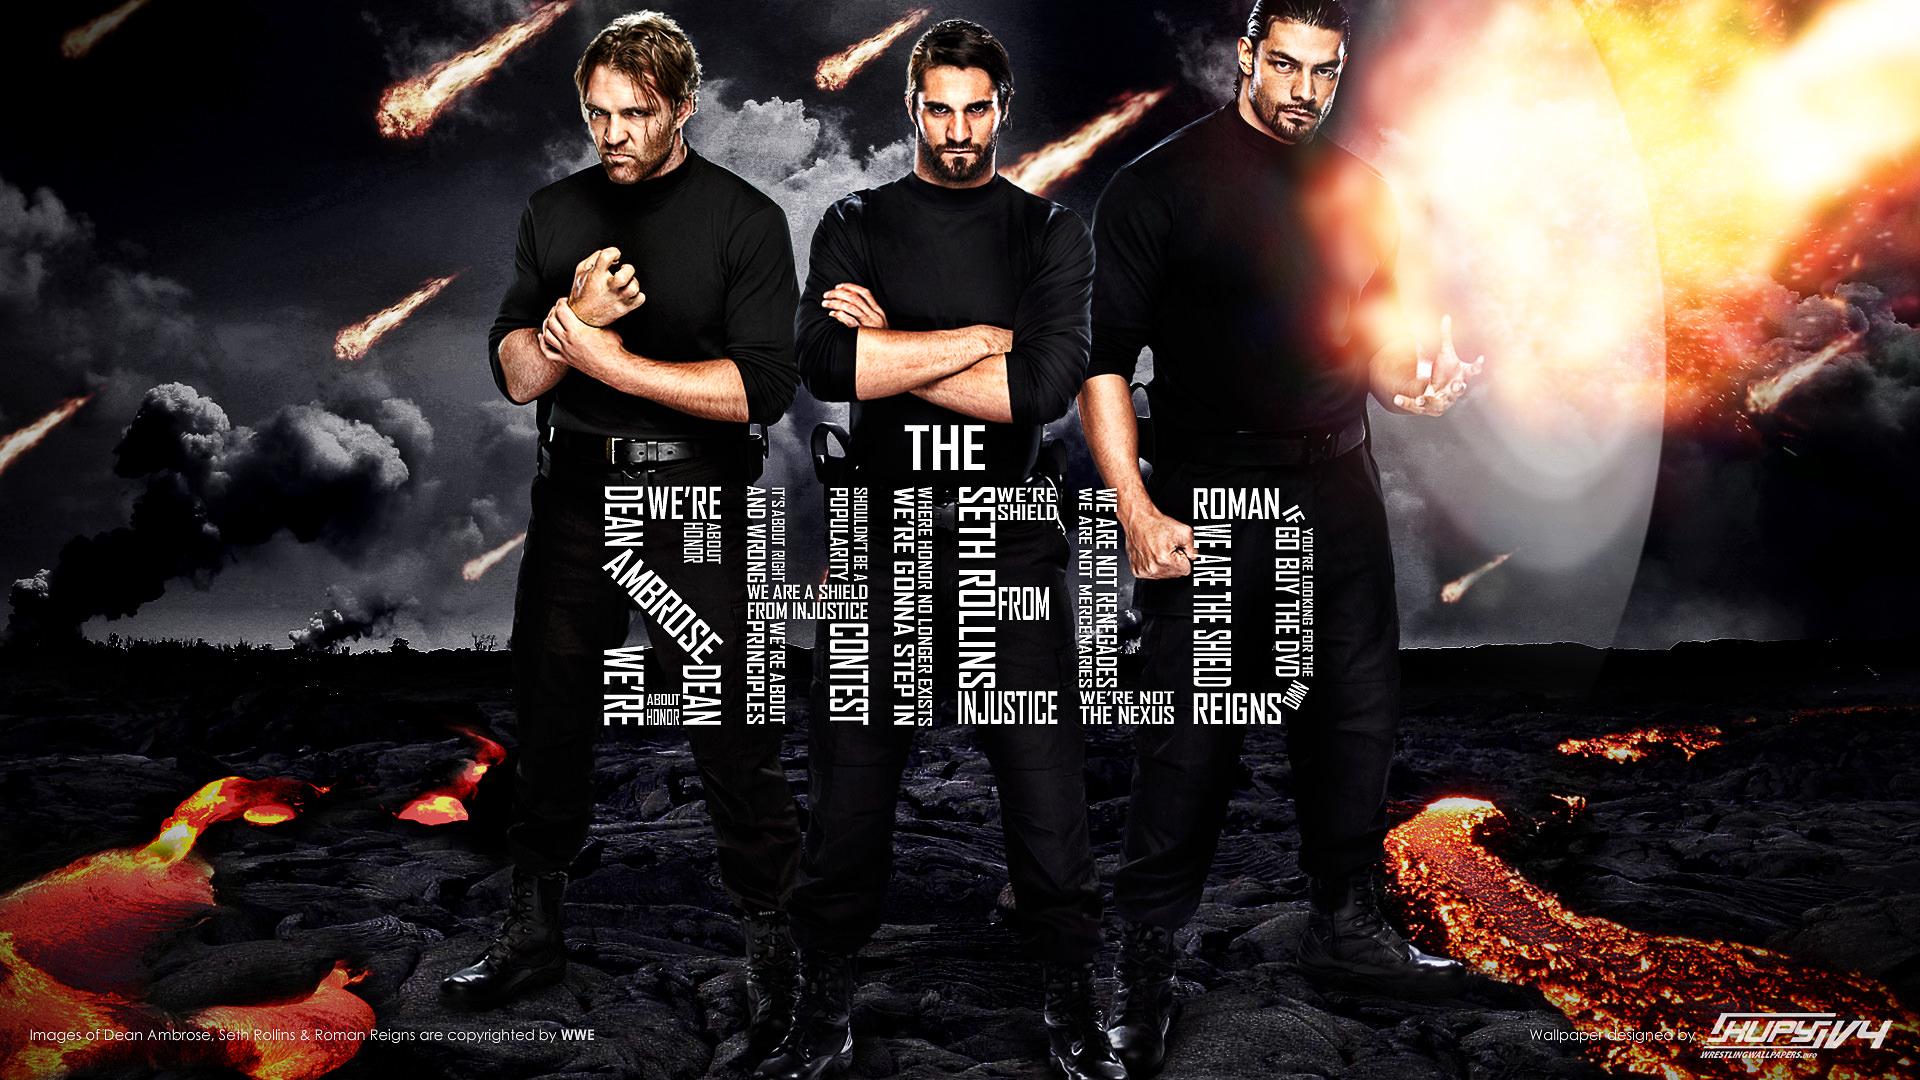 NEW The Shield wallpaper! Wrestling Wallpaper latest